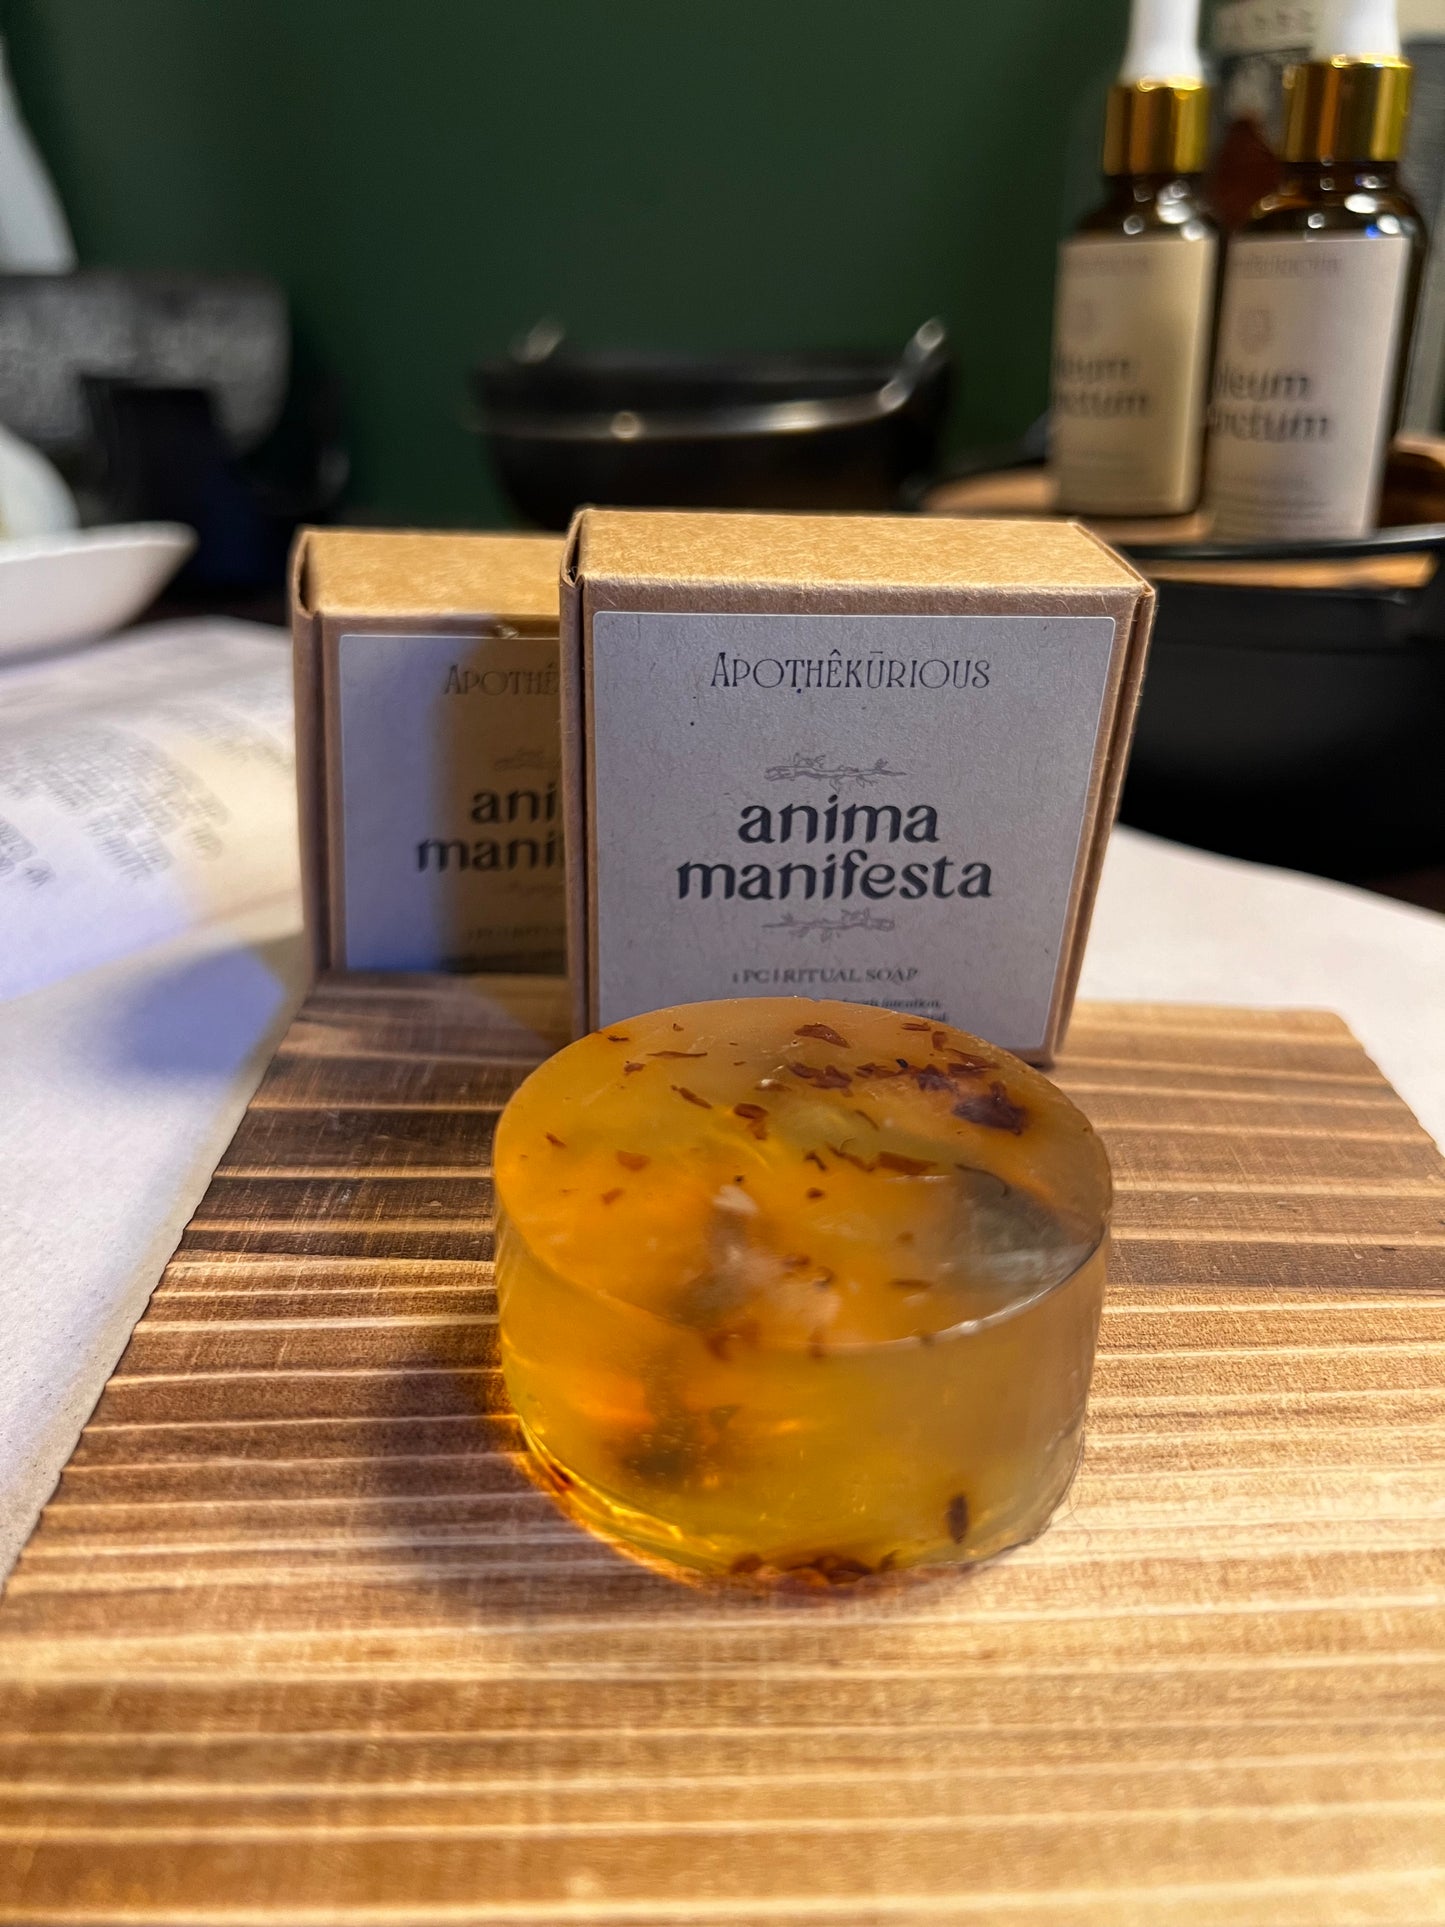 Anima Manifesta - Ritual Soap